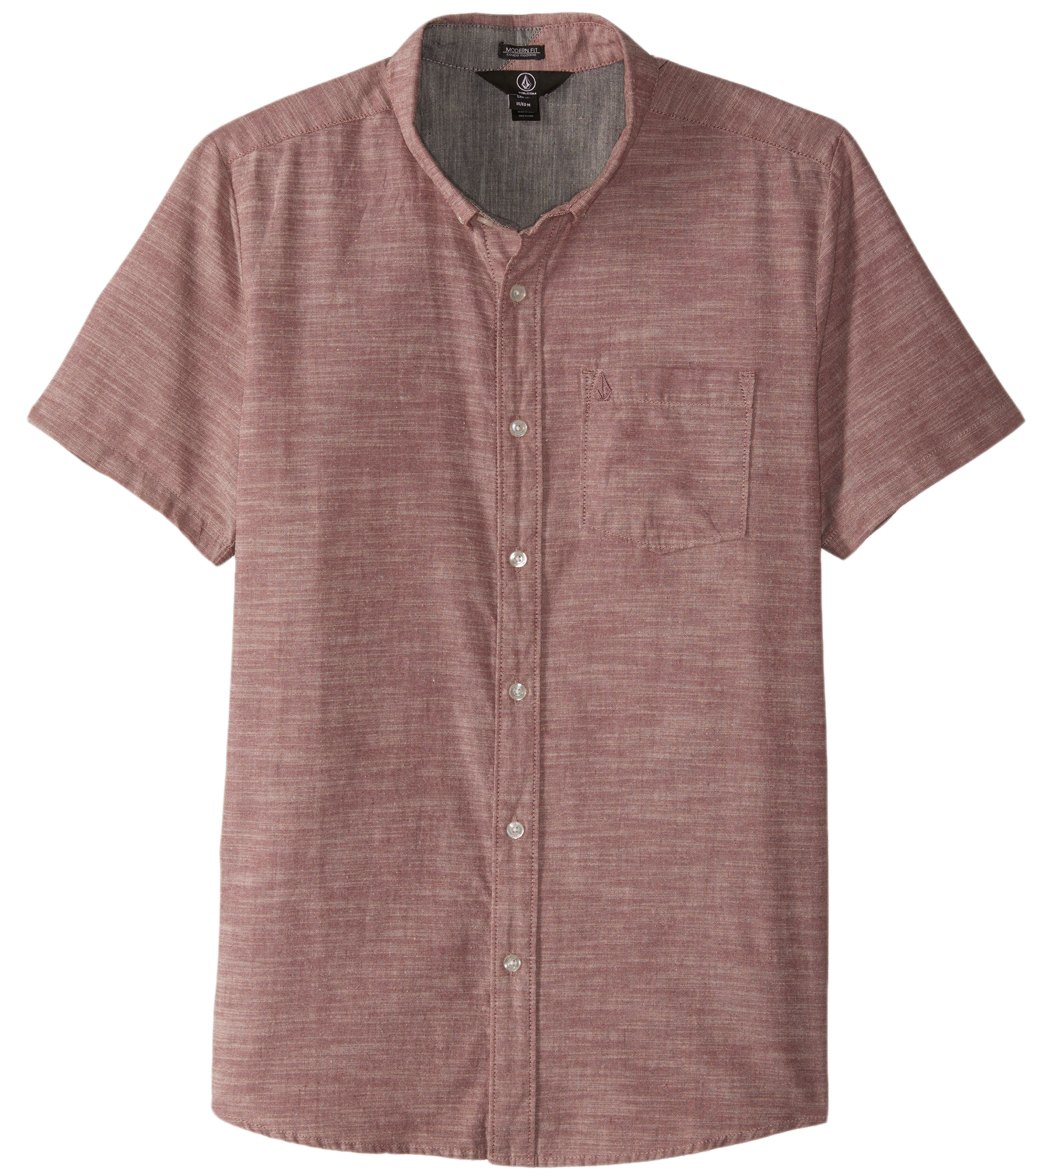 Volcom Men's Everett Oxford Short Sleeve Shirt - Cabernet Small Cotton/Polyester - Swimoutlet.com